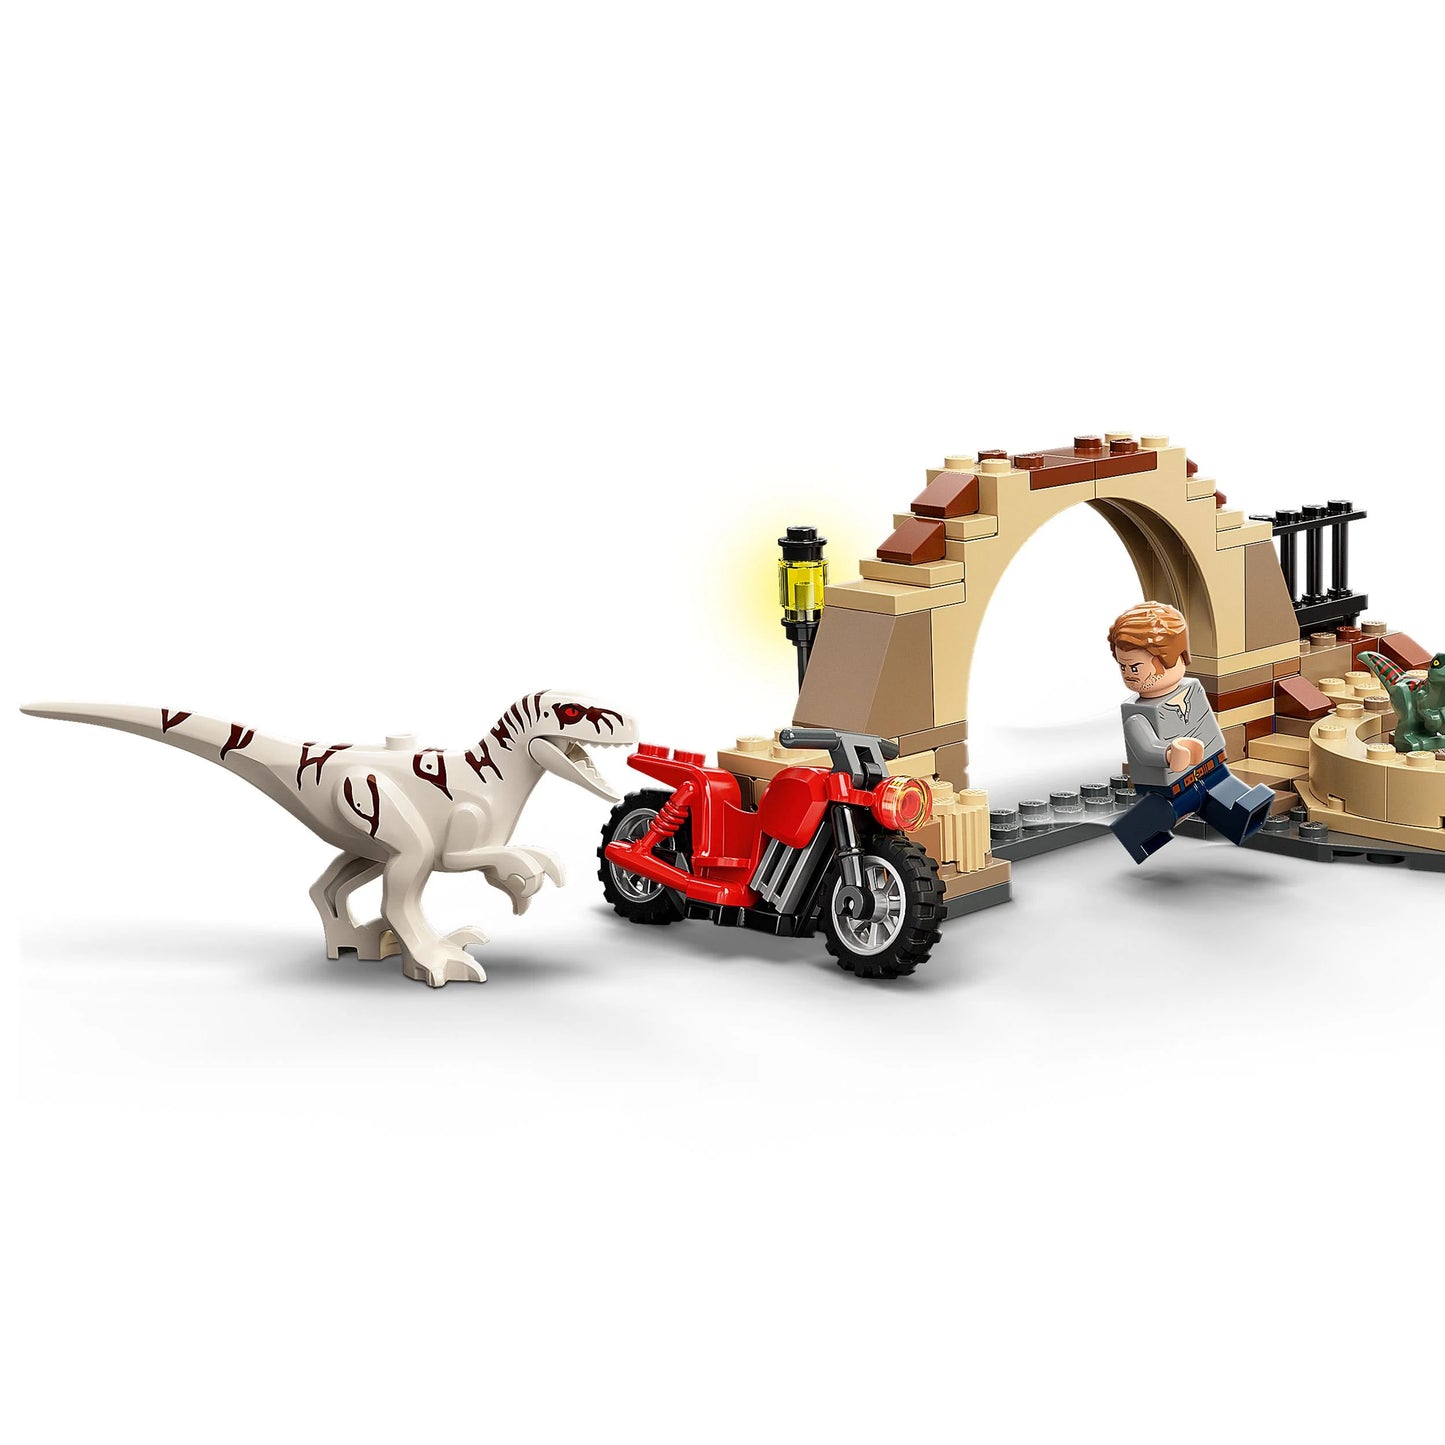 Atrociraptor Dinosaurus Motorachtervolging-LEGO Jurassic World